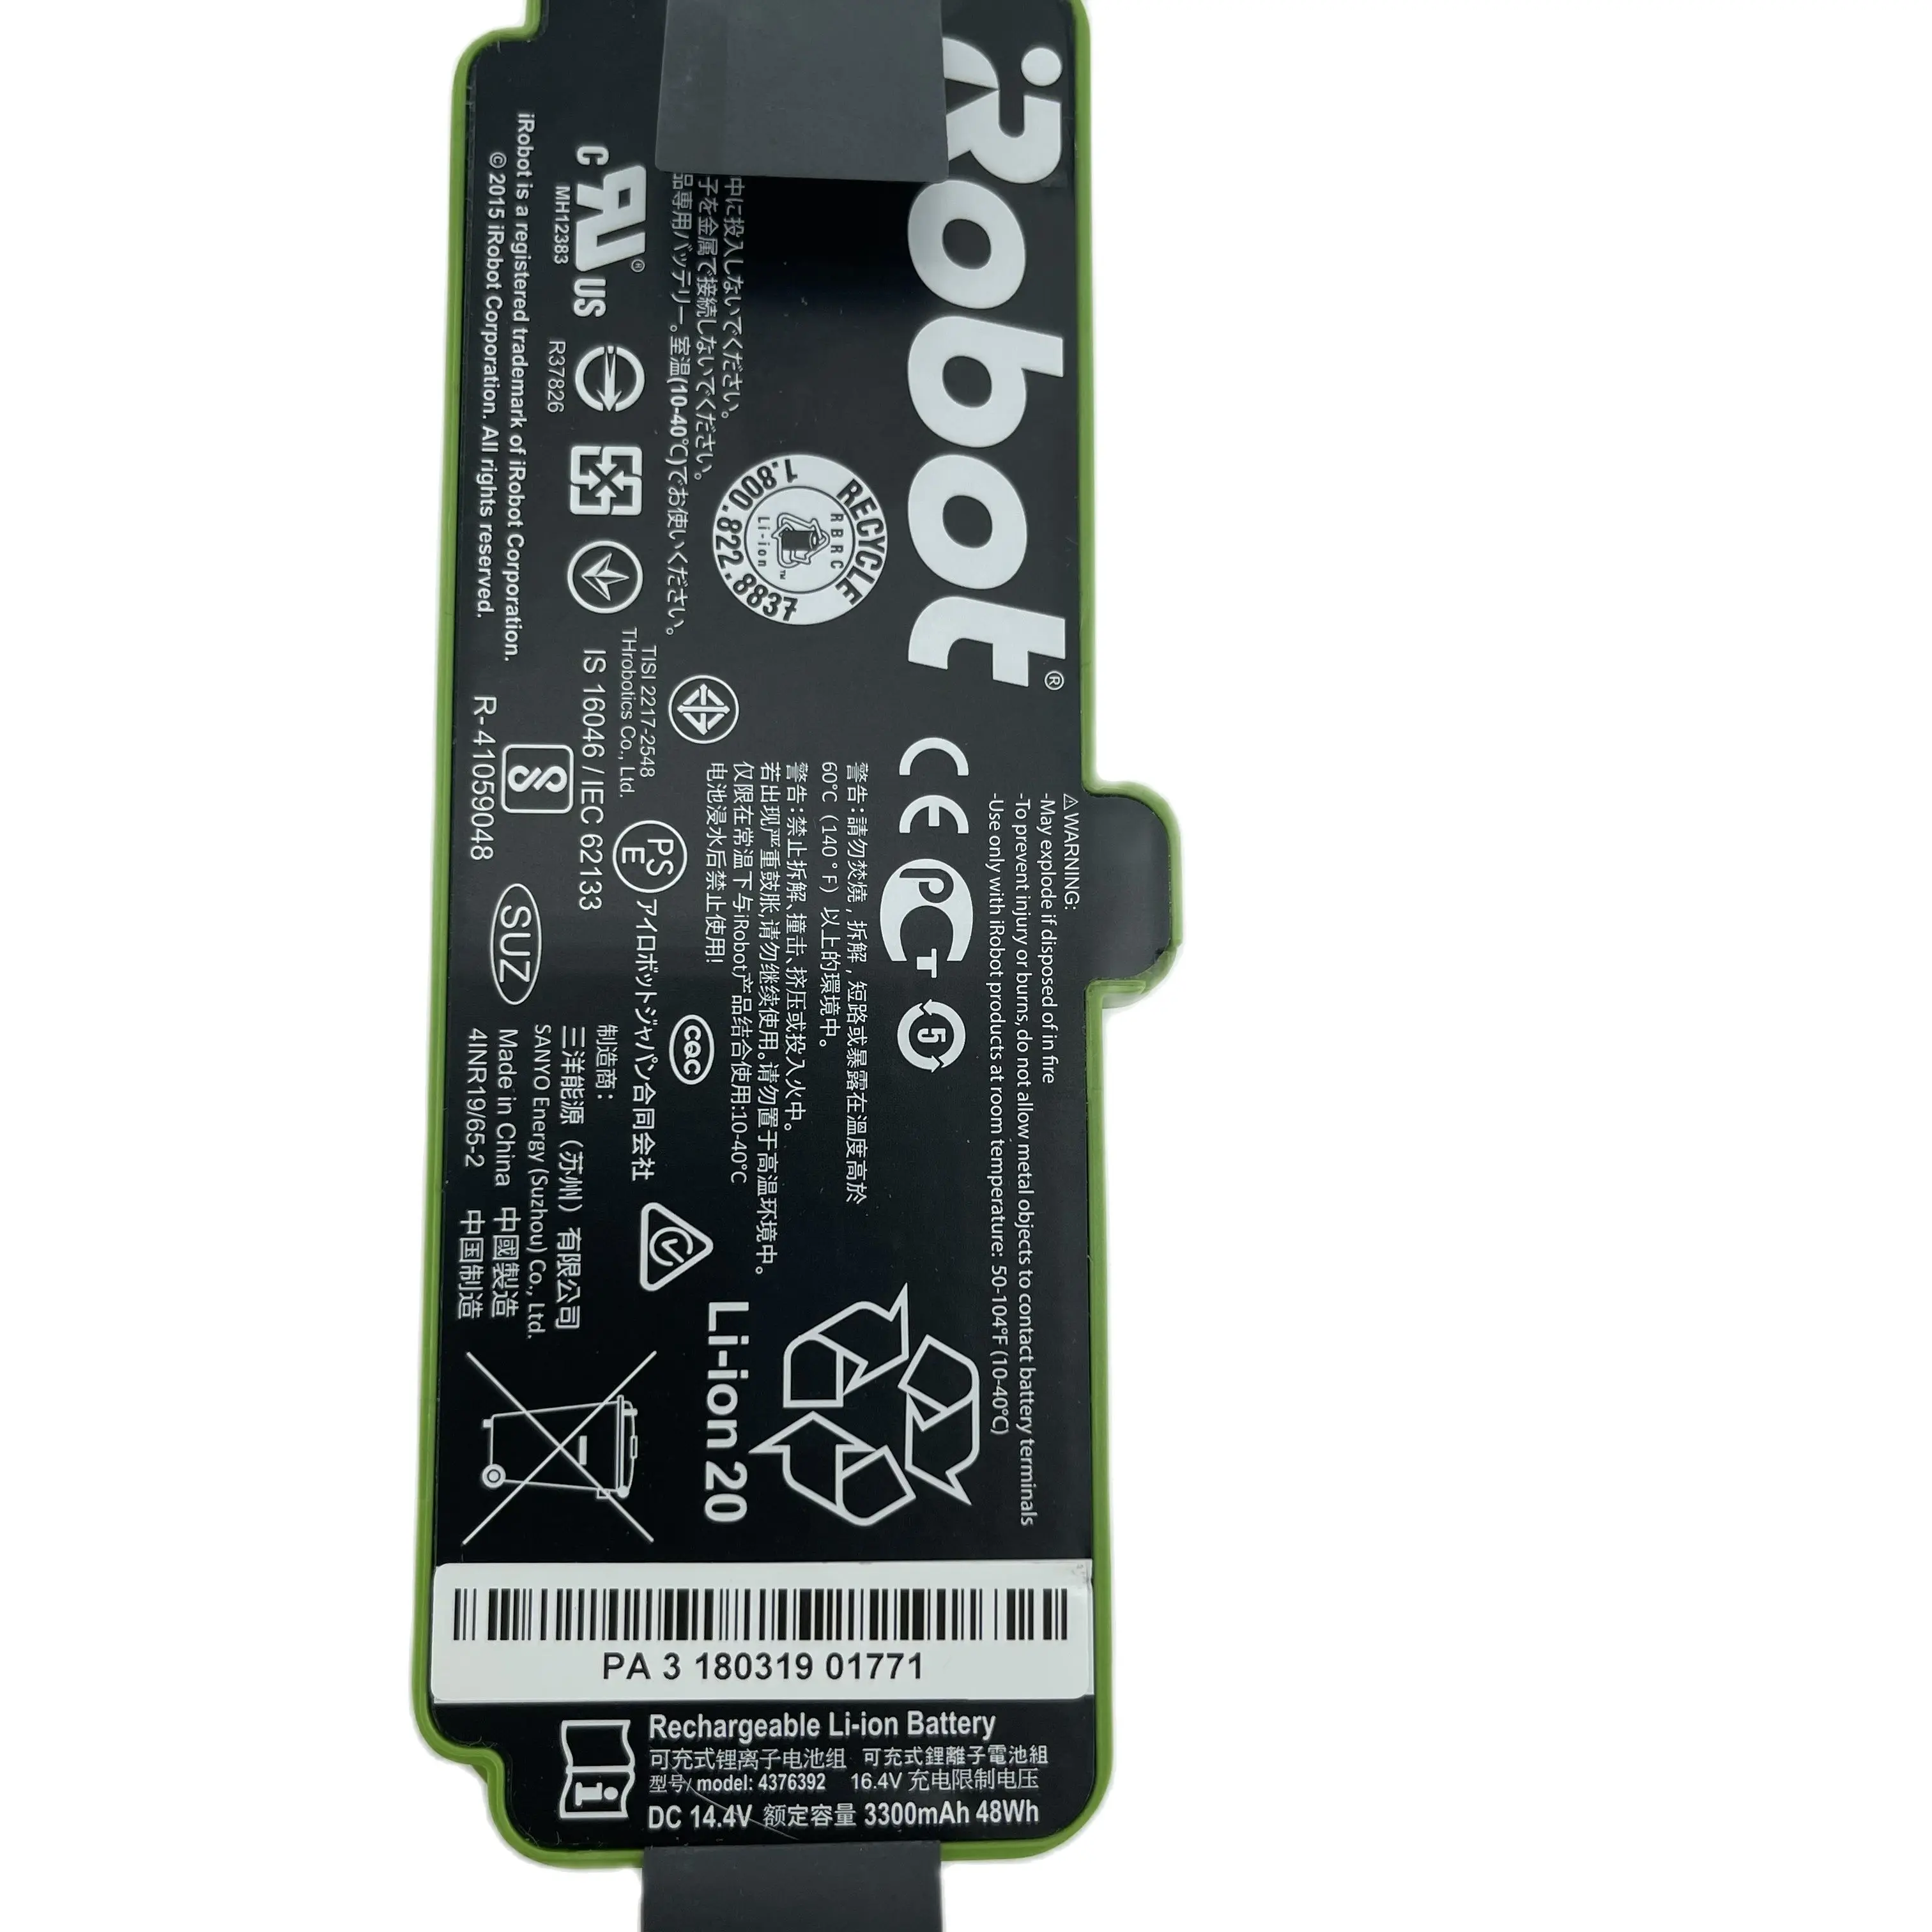 Batería de Litio Original Roomba Serie 900 de 3300mah - Comprar